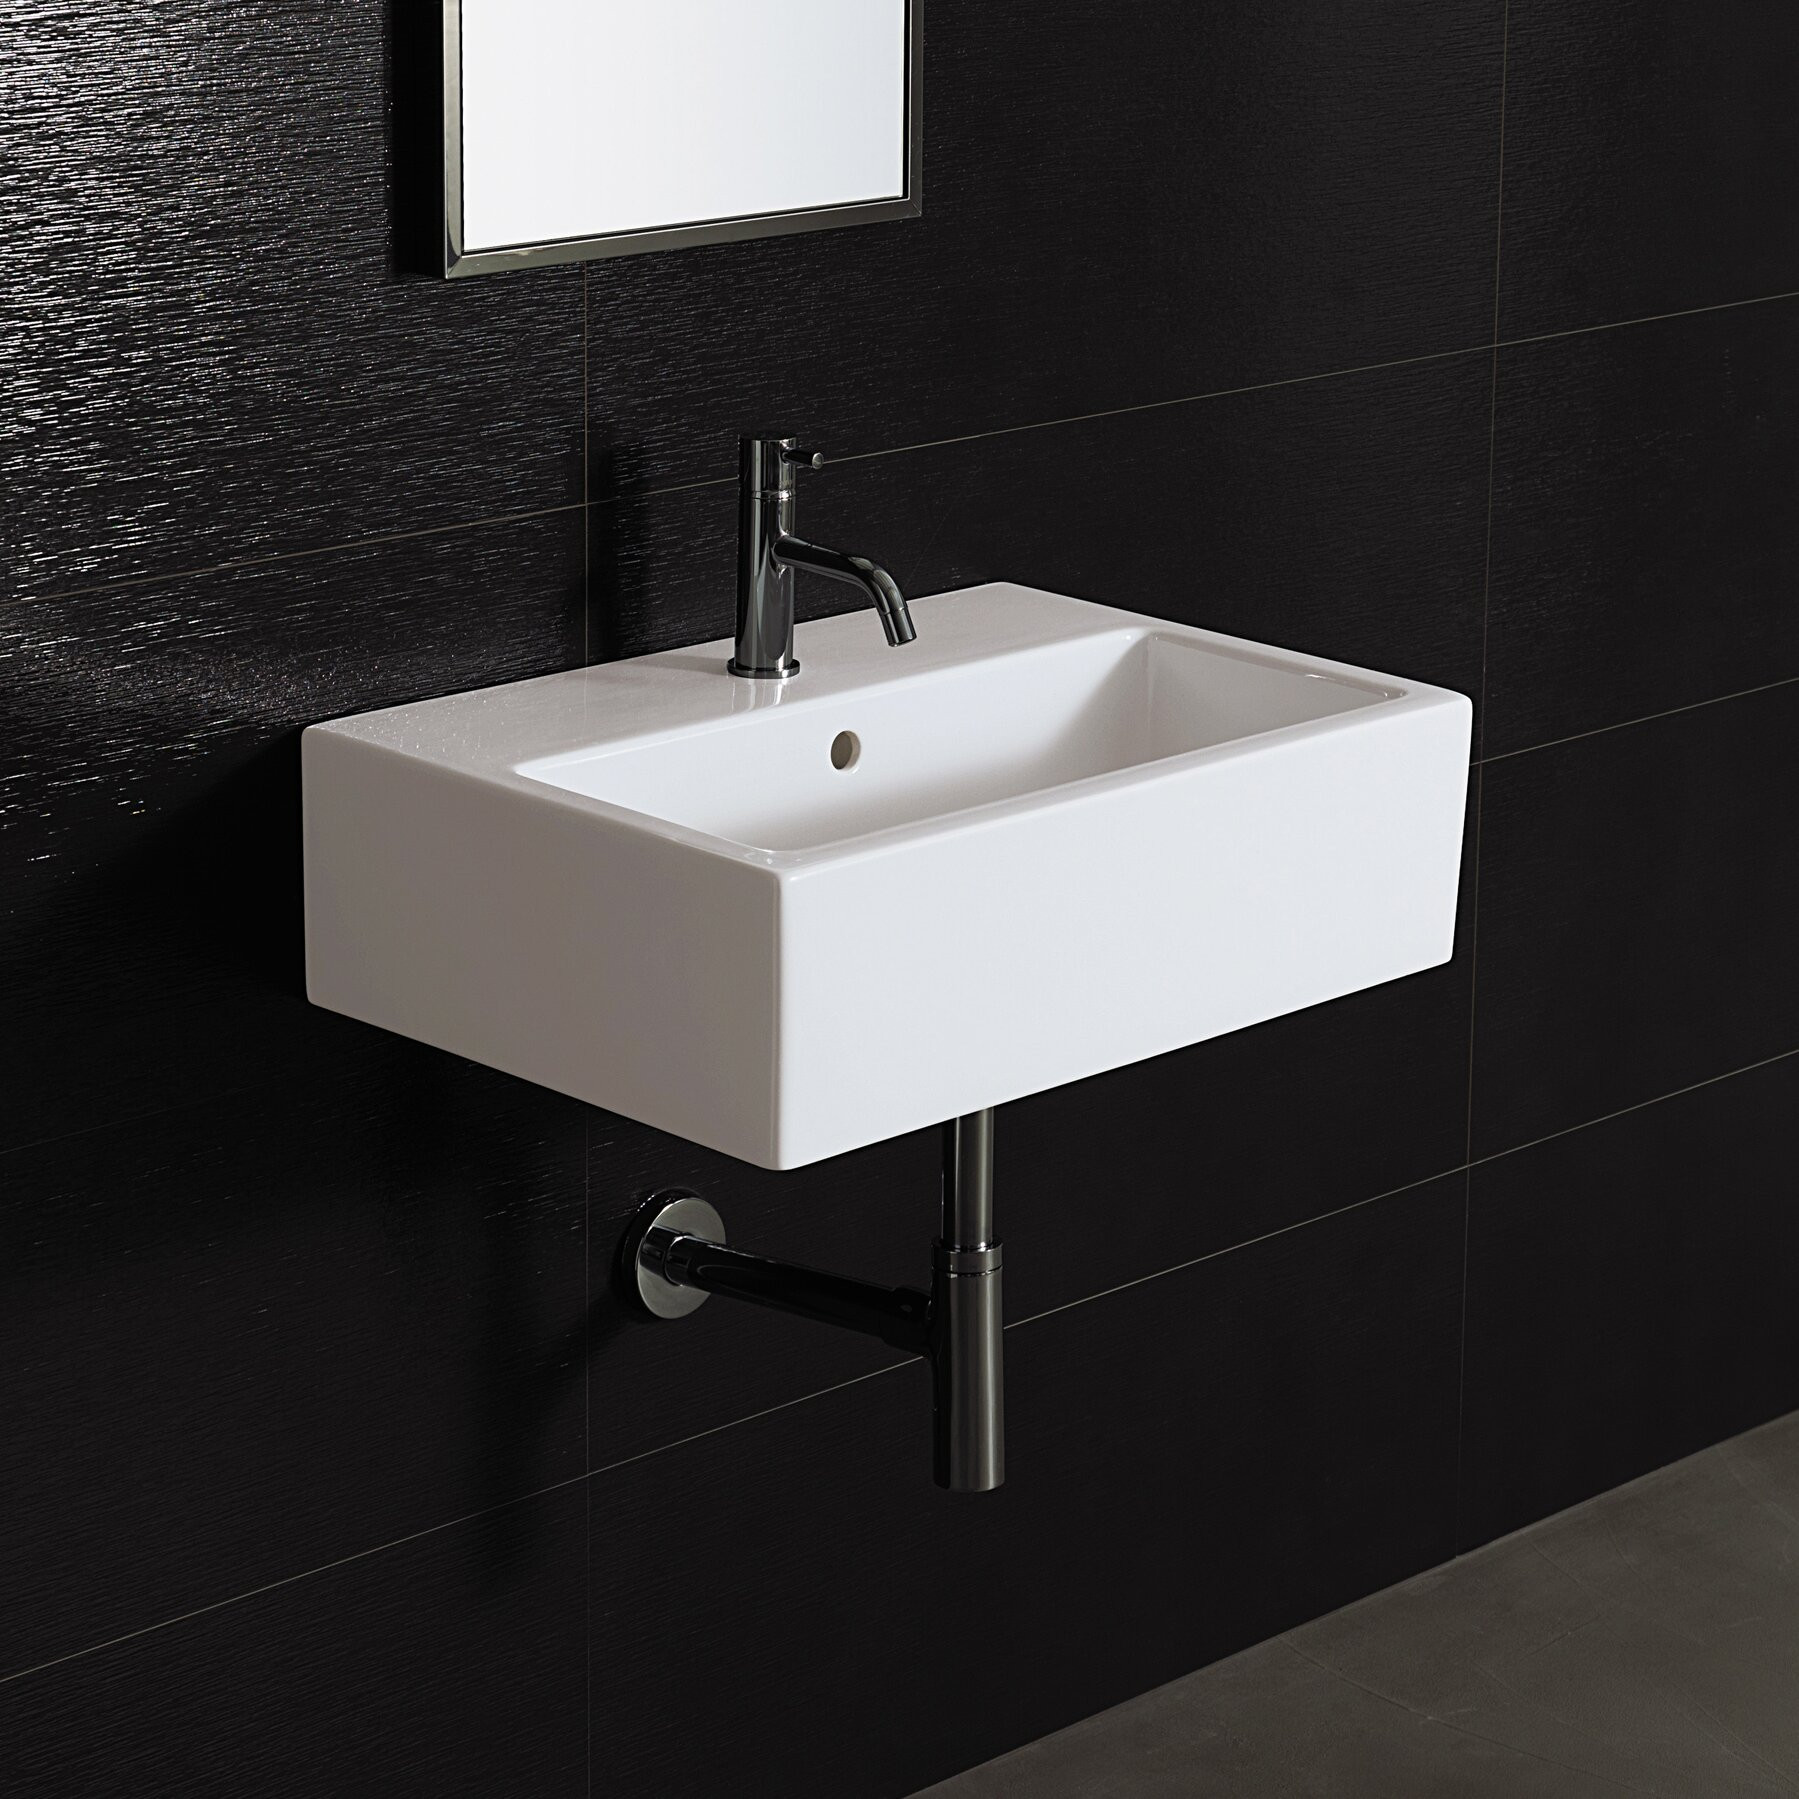 Wayfair Bathroom Sinks
 Bissonnet Area Boutique Wall Mount Bathroom Sink & Reviews